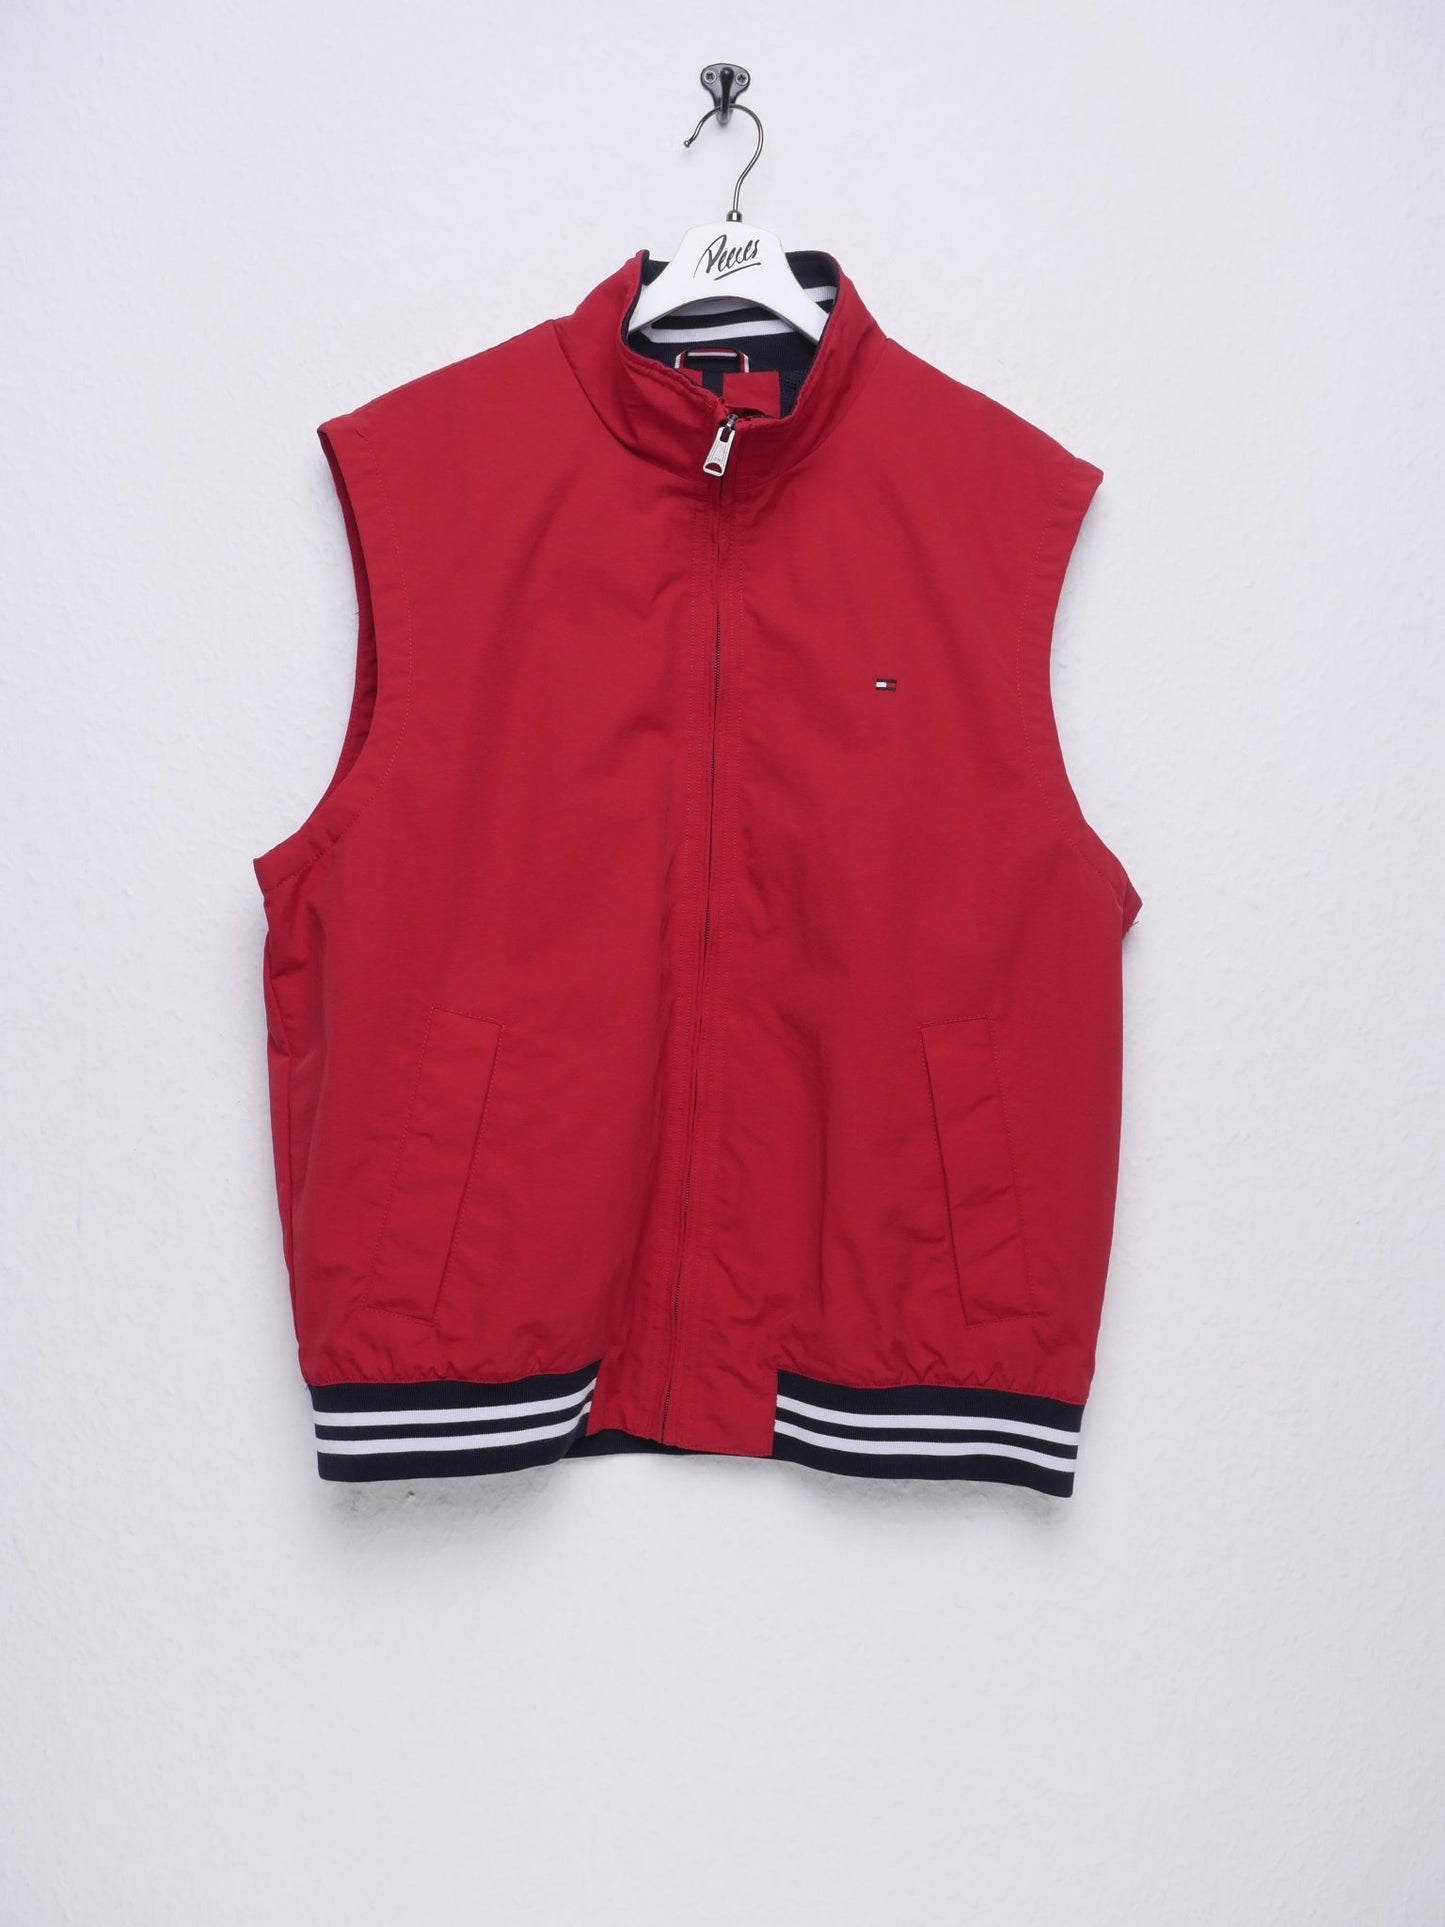 tommy hilfiger embroidered Logo red vest Jacke - Peeces